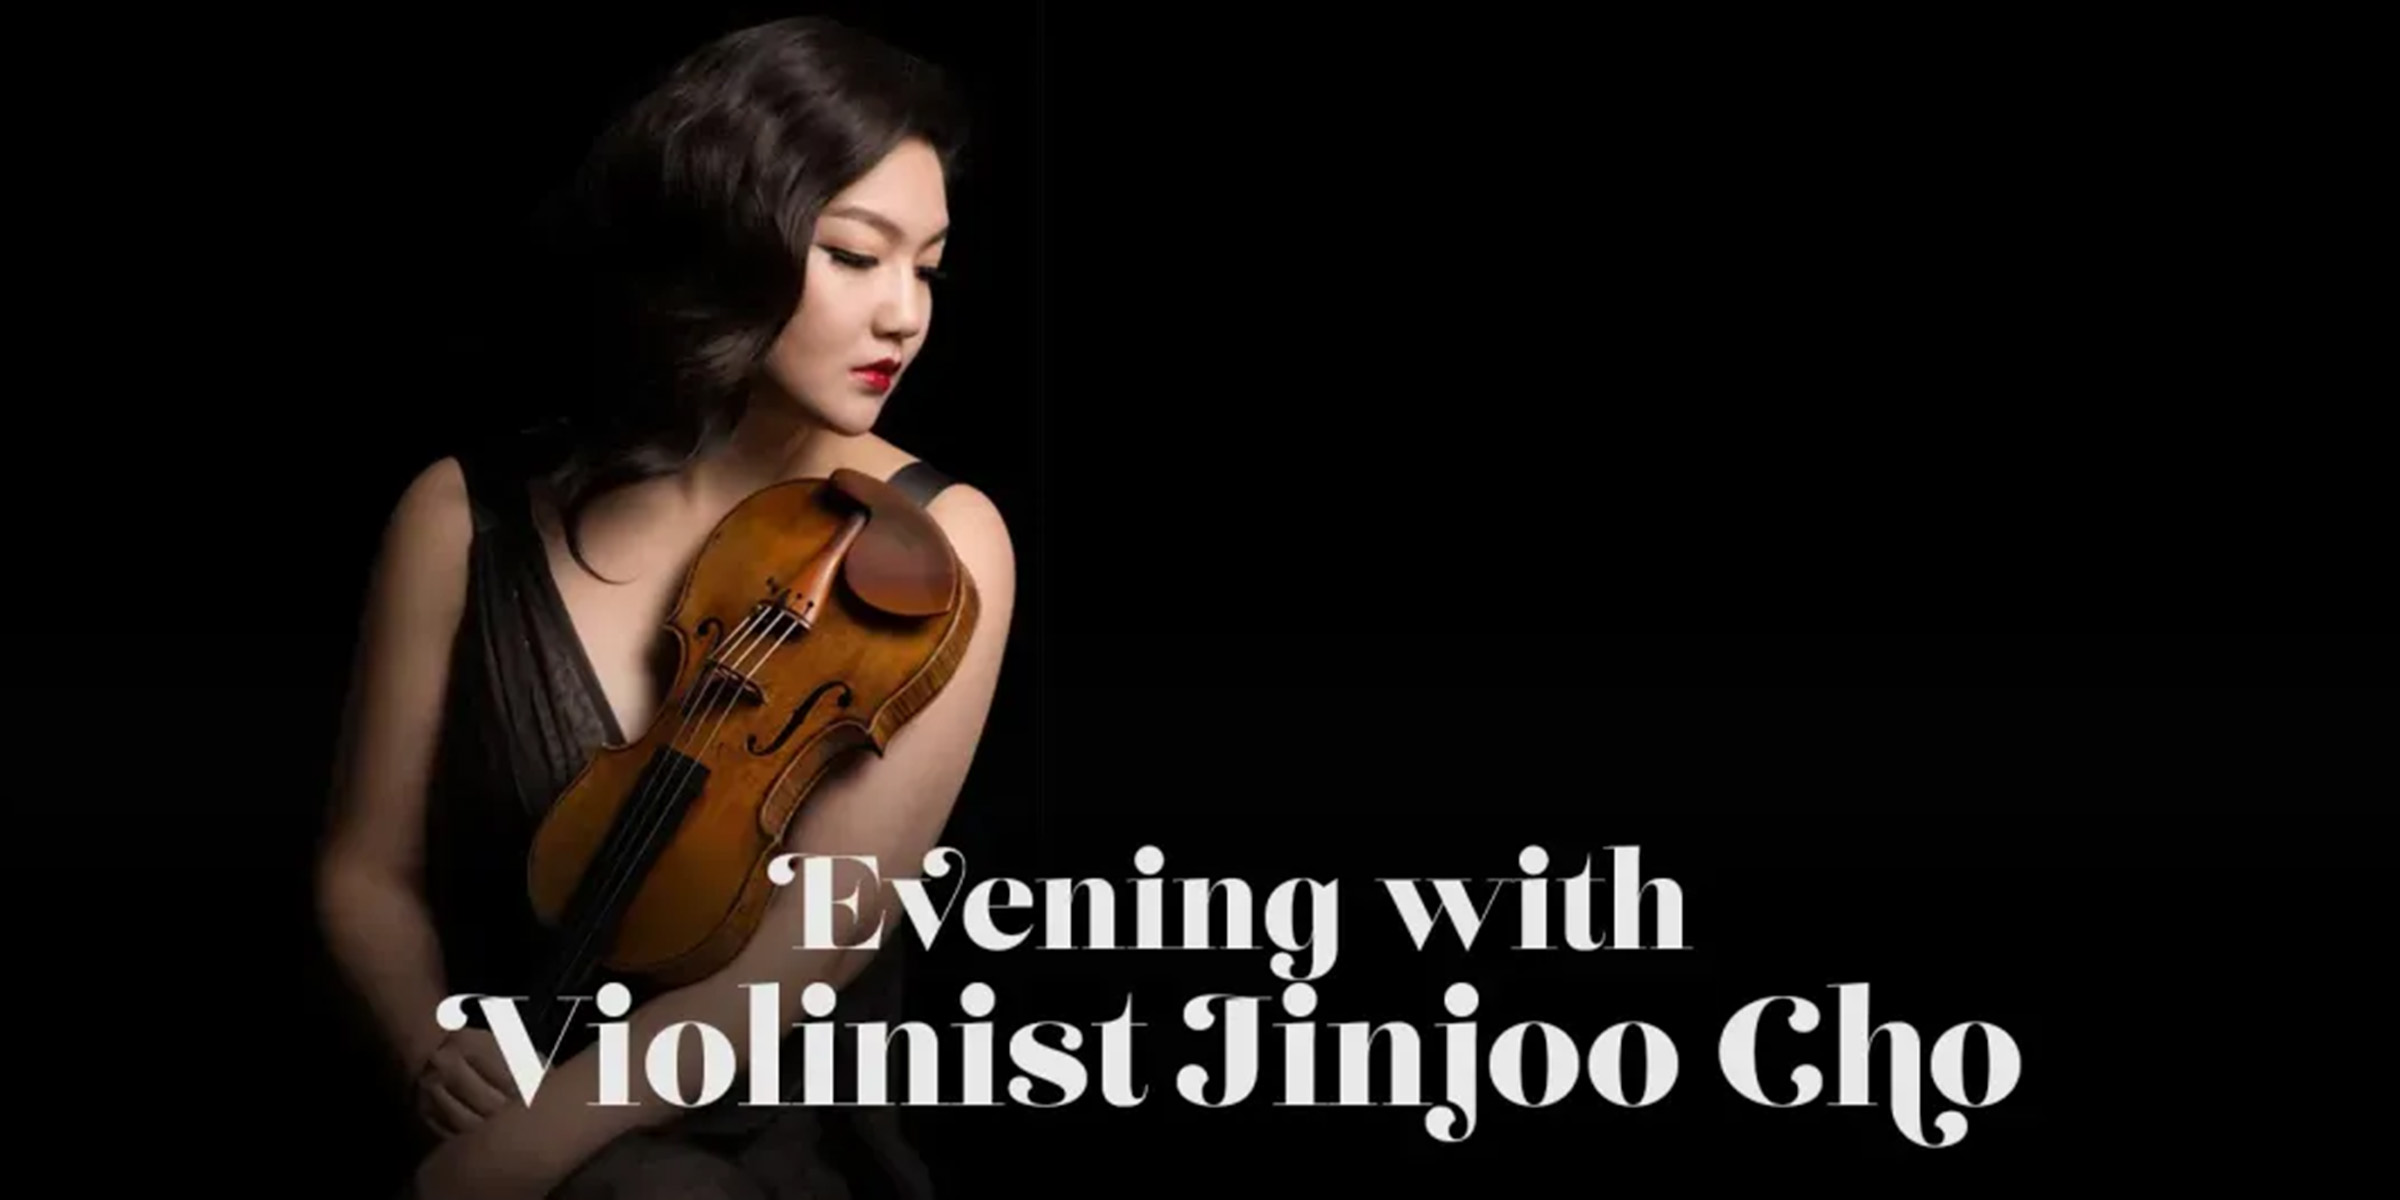 jinjoo with her violin